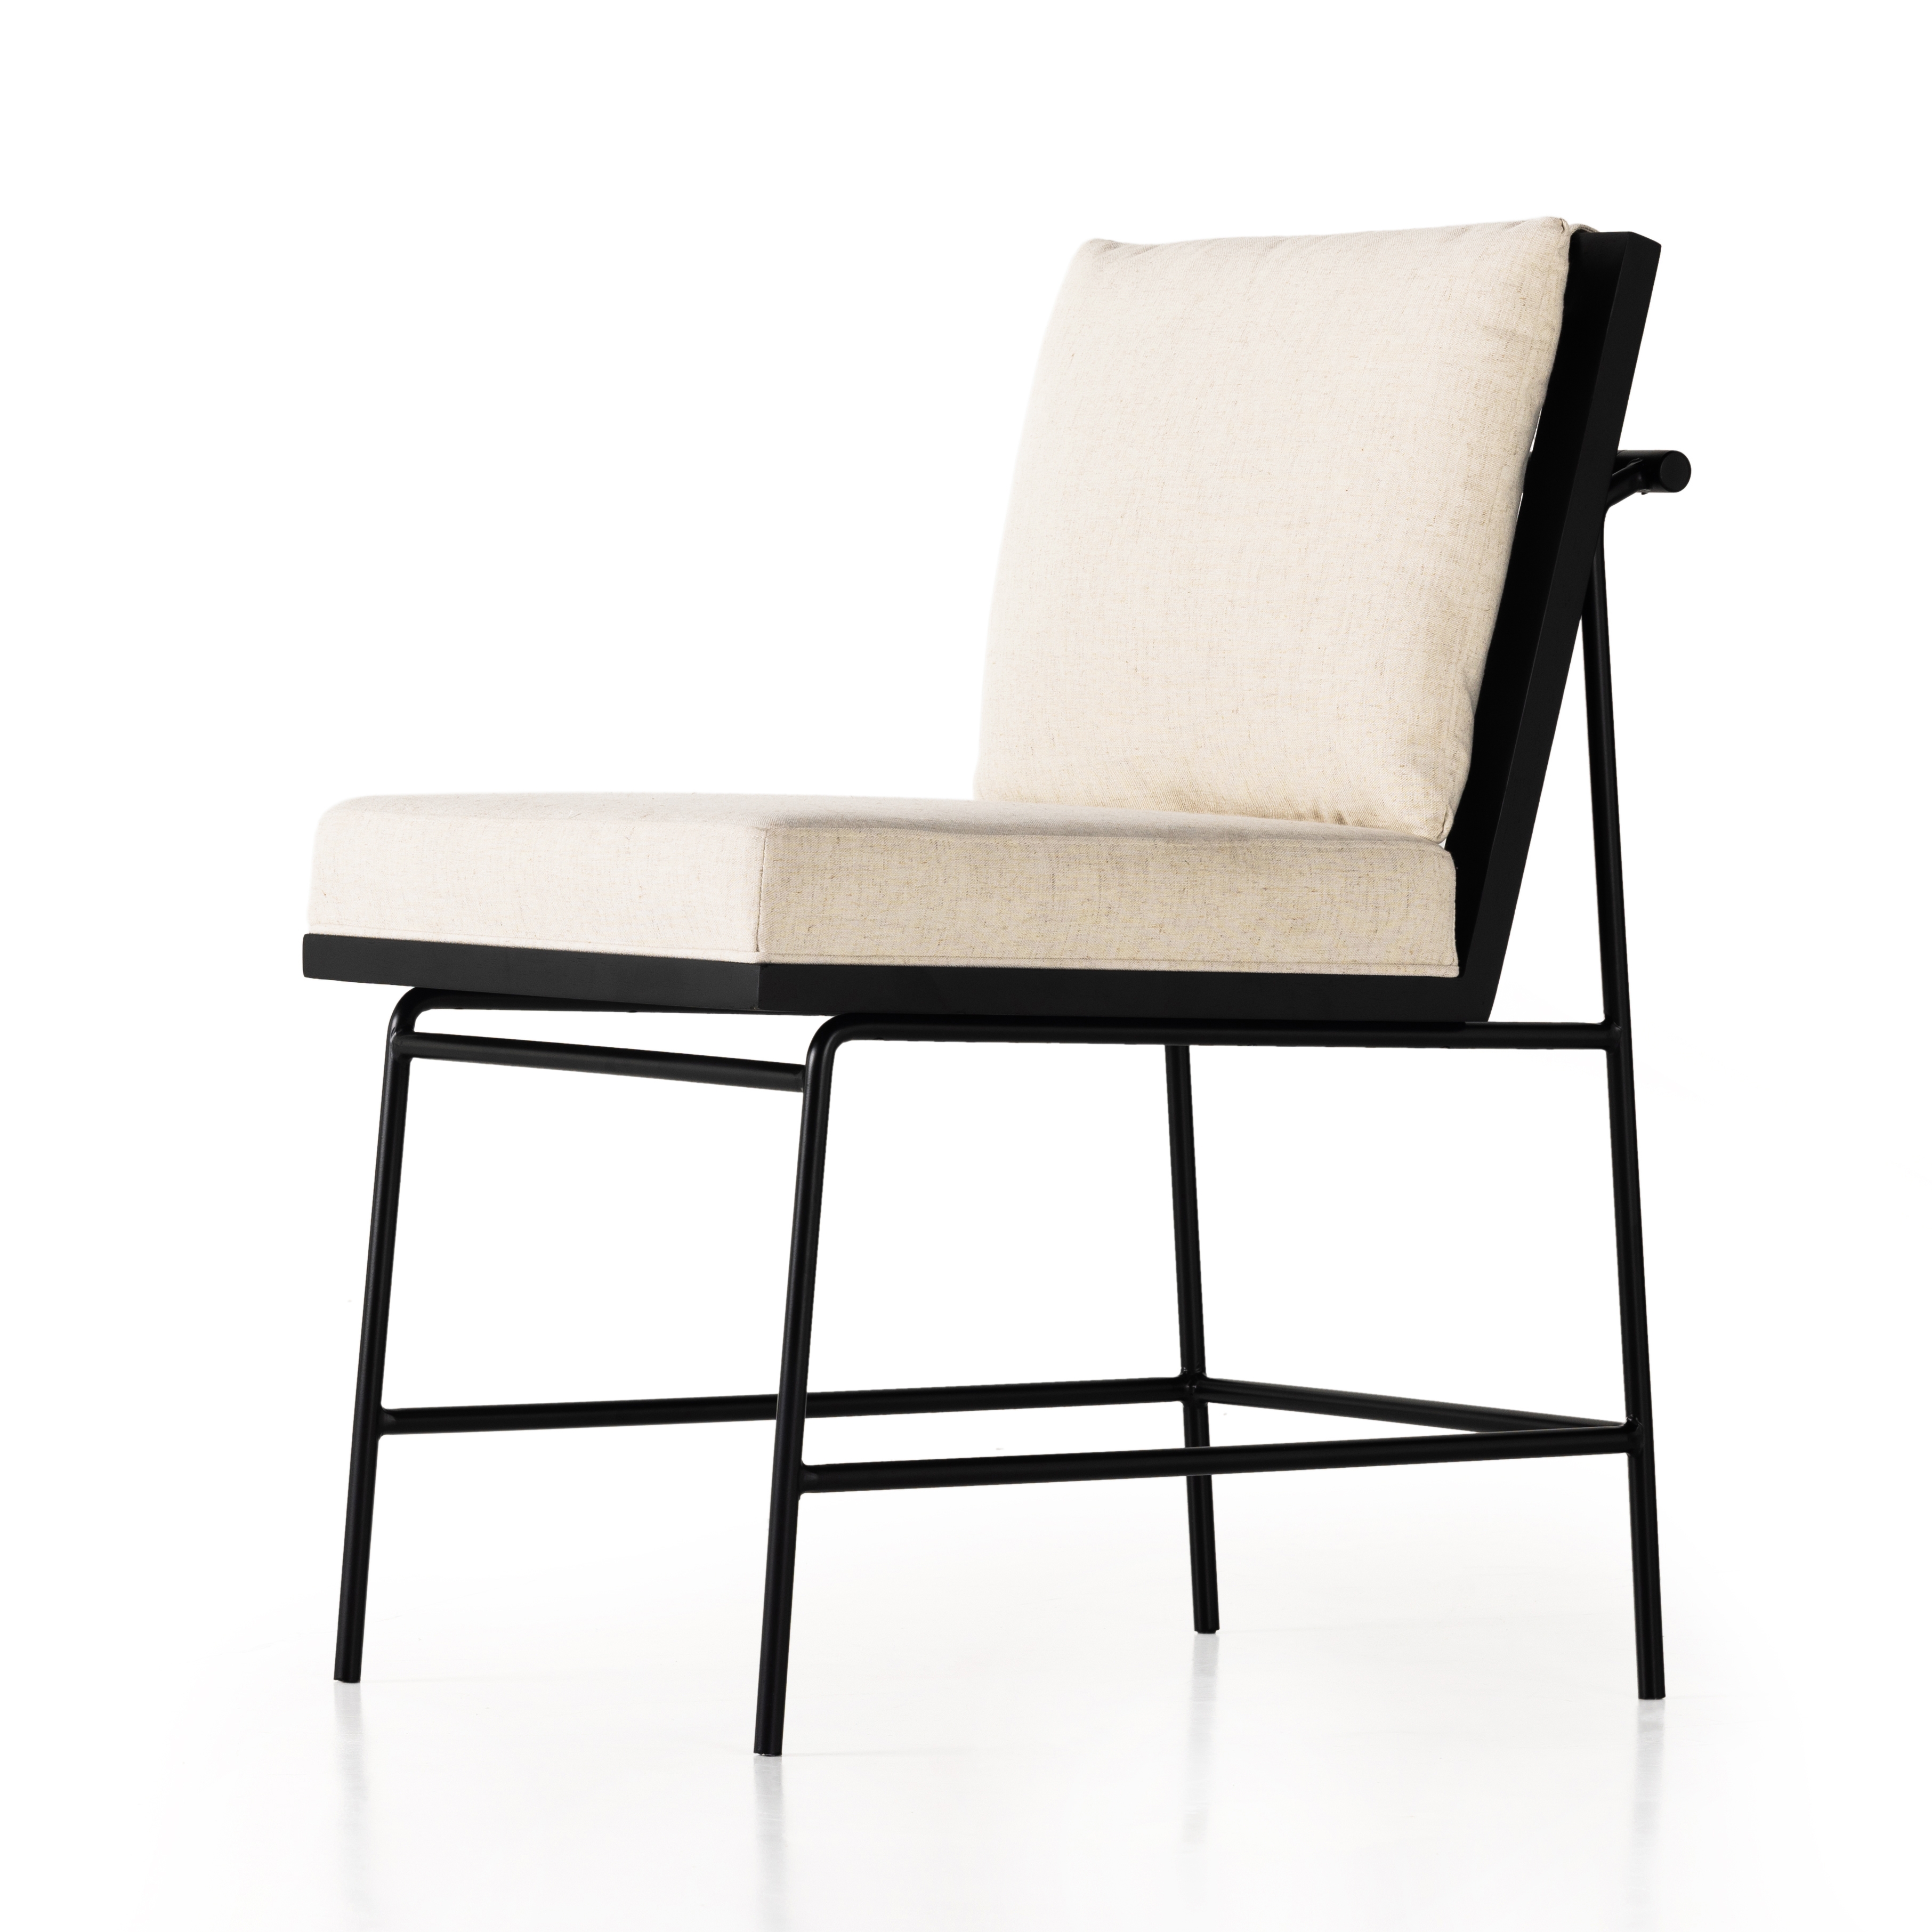 Crete Dining Chair-Savile Flax - Image 2